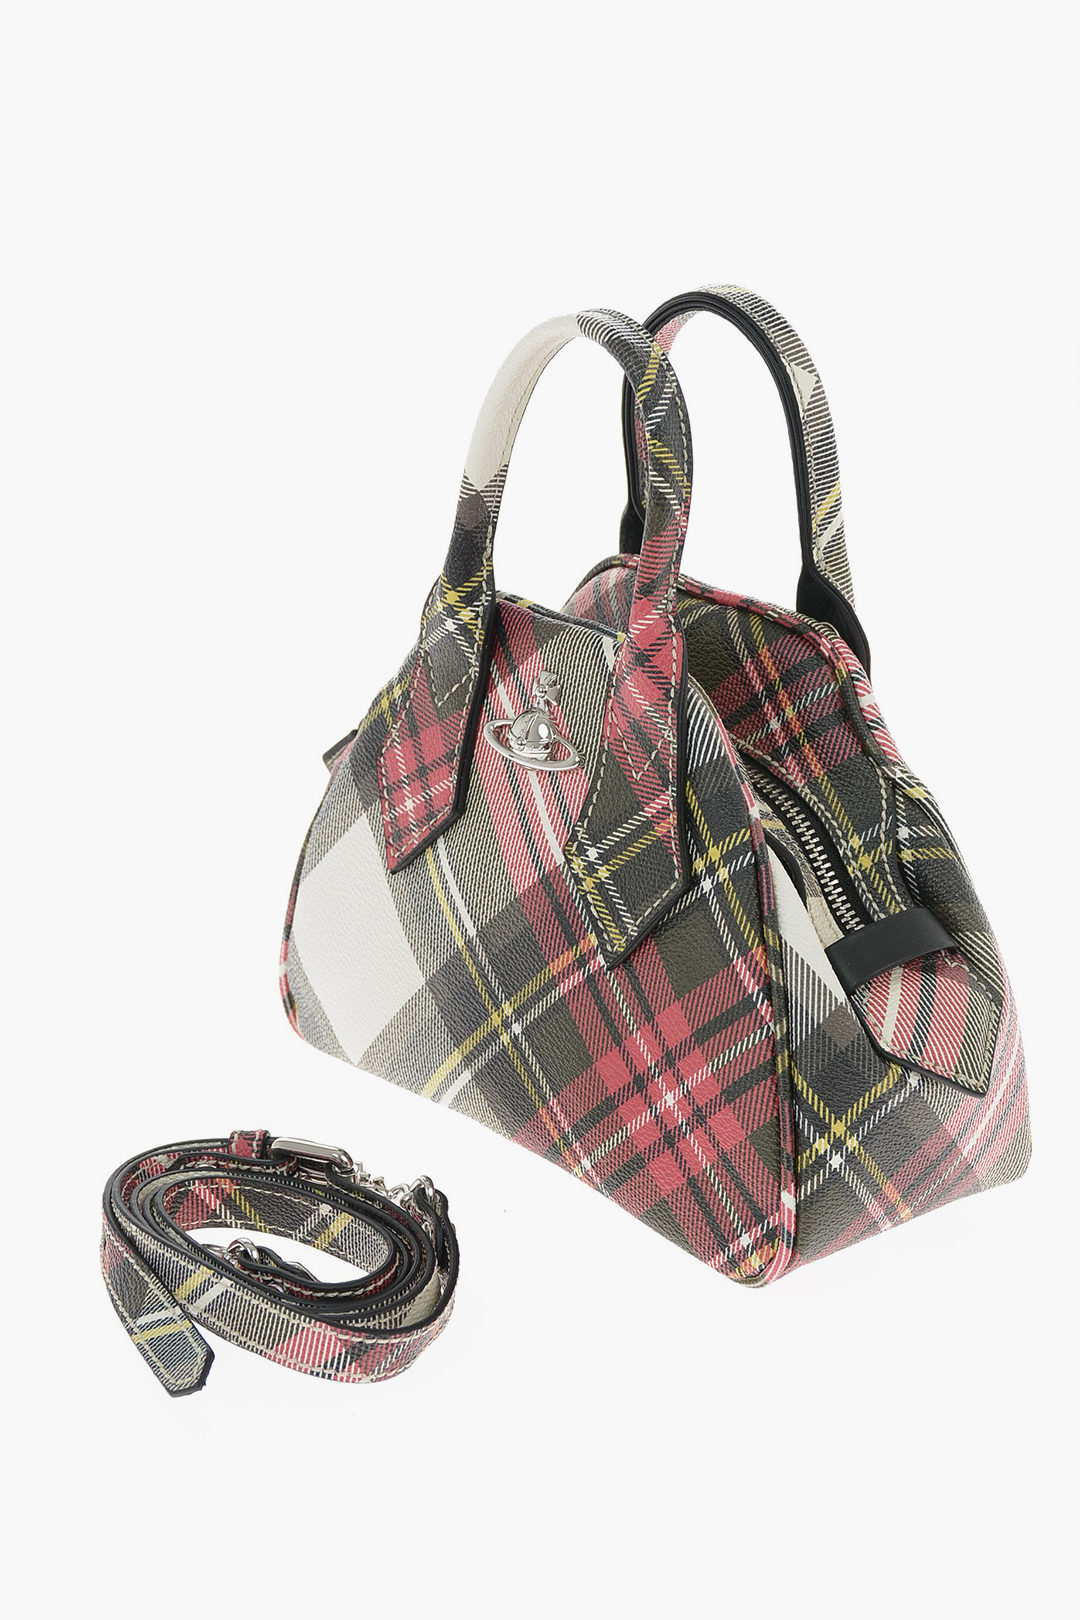 Flannels Vivienne Westwood Bag Best Sale, SAVE 50%.